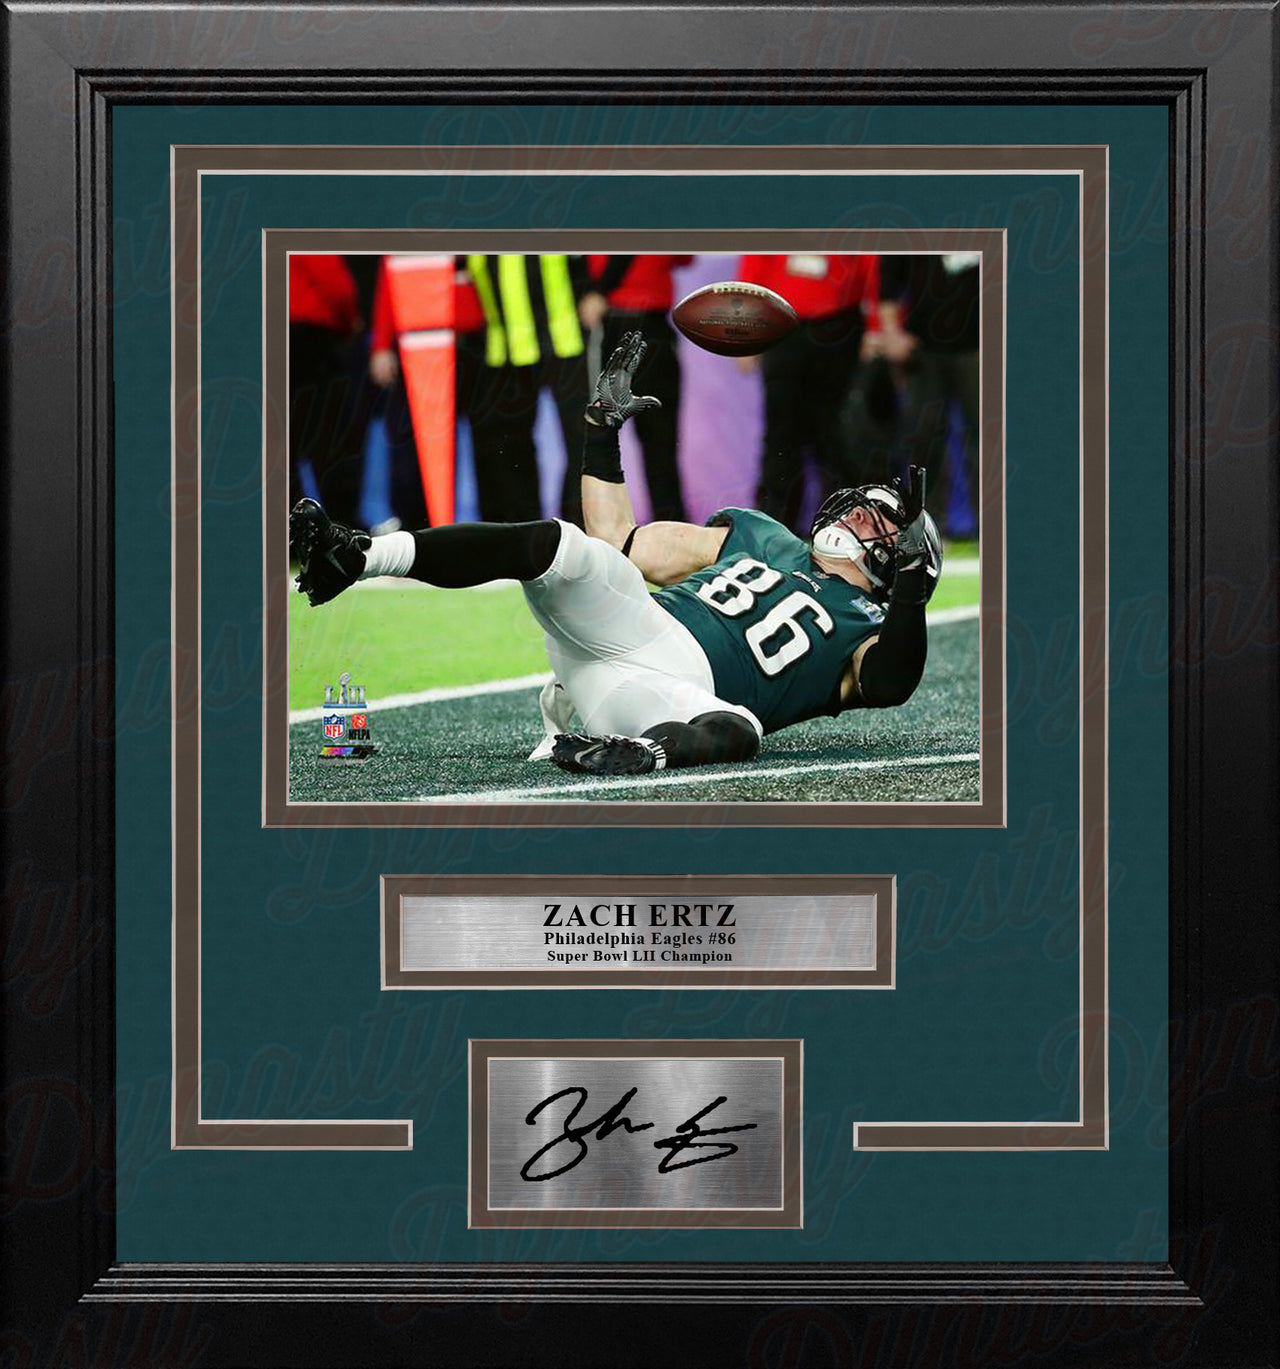 Zach Ertz Philadelphia Eagles Super Bowl LII Touchdown 8" x 10" Framed Football Photo with Engraved Autograph